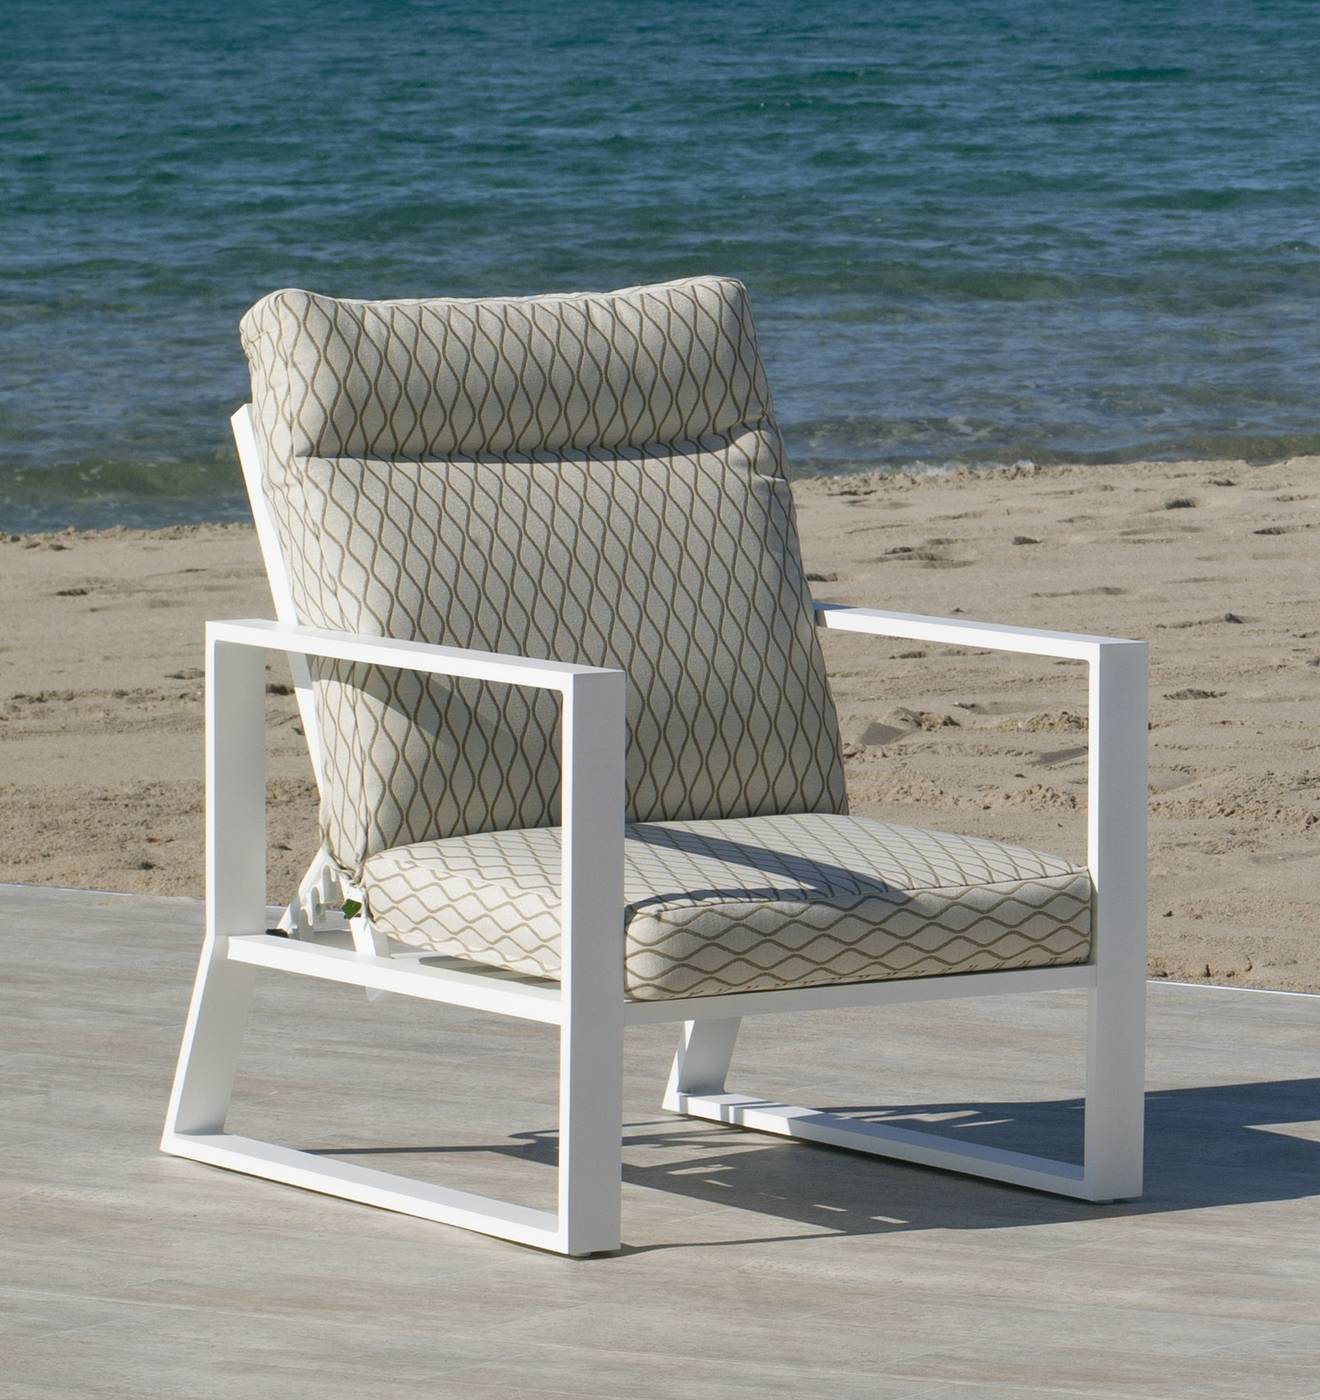 Set Aluminio Bolonia-650 - Conjunto aluminio: sofá 2 plazas + 2 sillones + mesa de comedor + 2 taburetes + cojines. Respaldos reclinables. Colores: blanco, antracita o bronce.